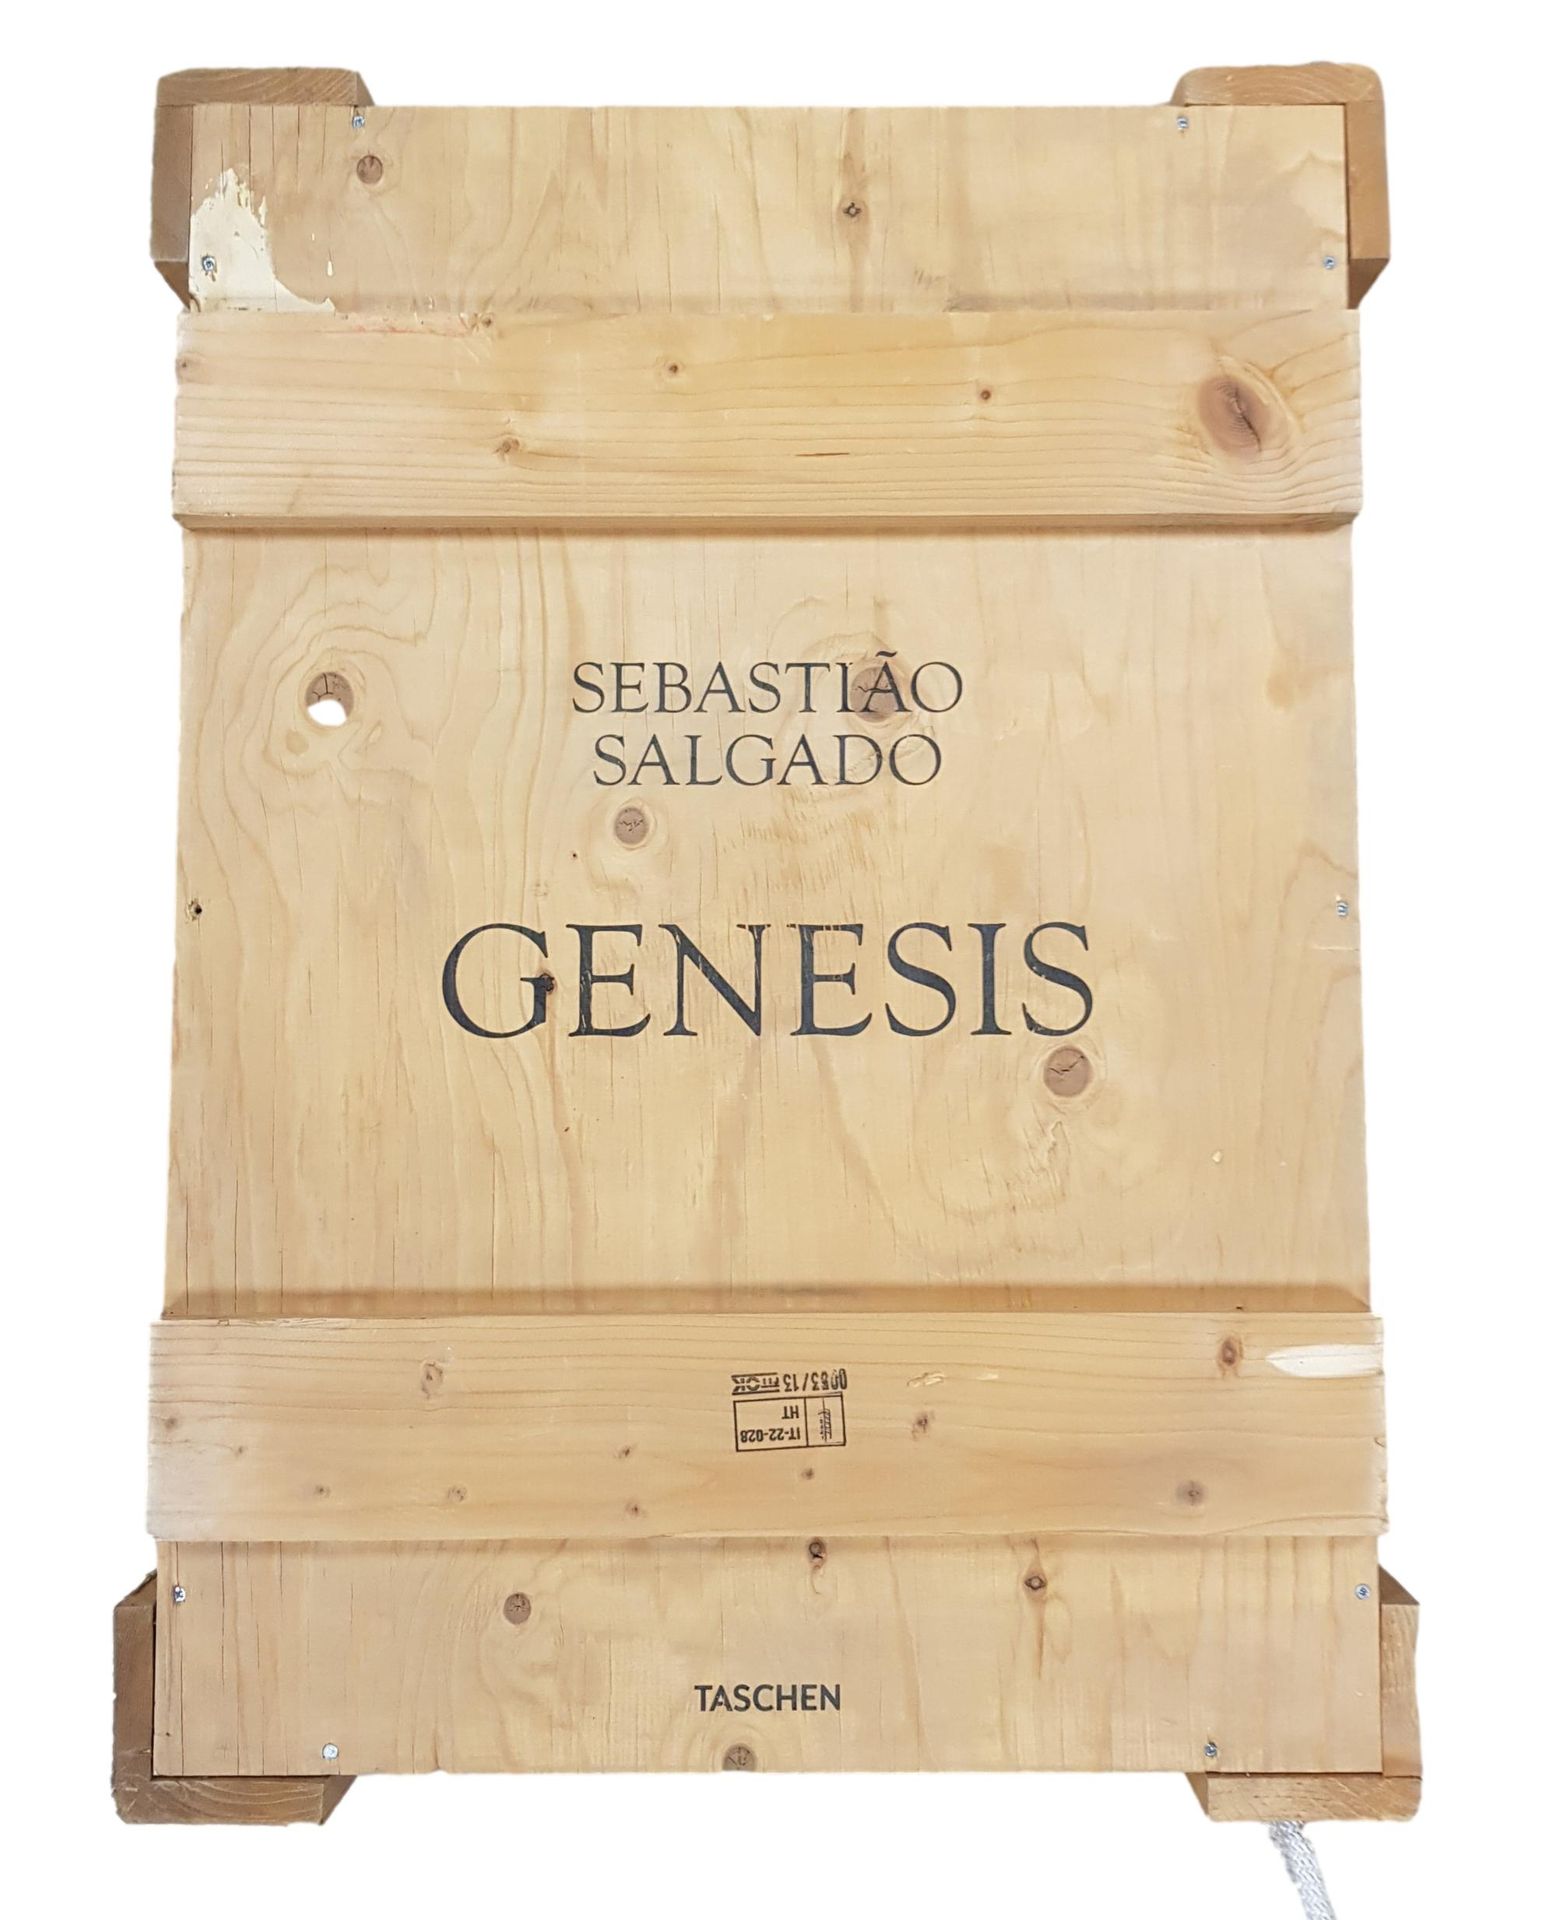 Null Sebastião Salgado (1944)
Genesis.
Taschen, Cologne, 2013.
In-plano (71 x 48&hellip;